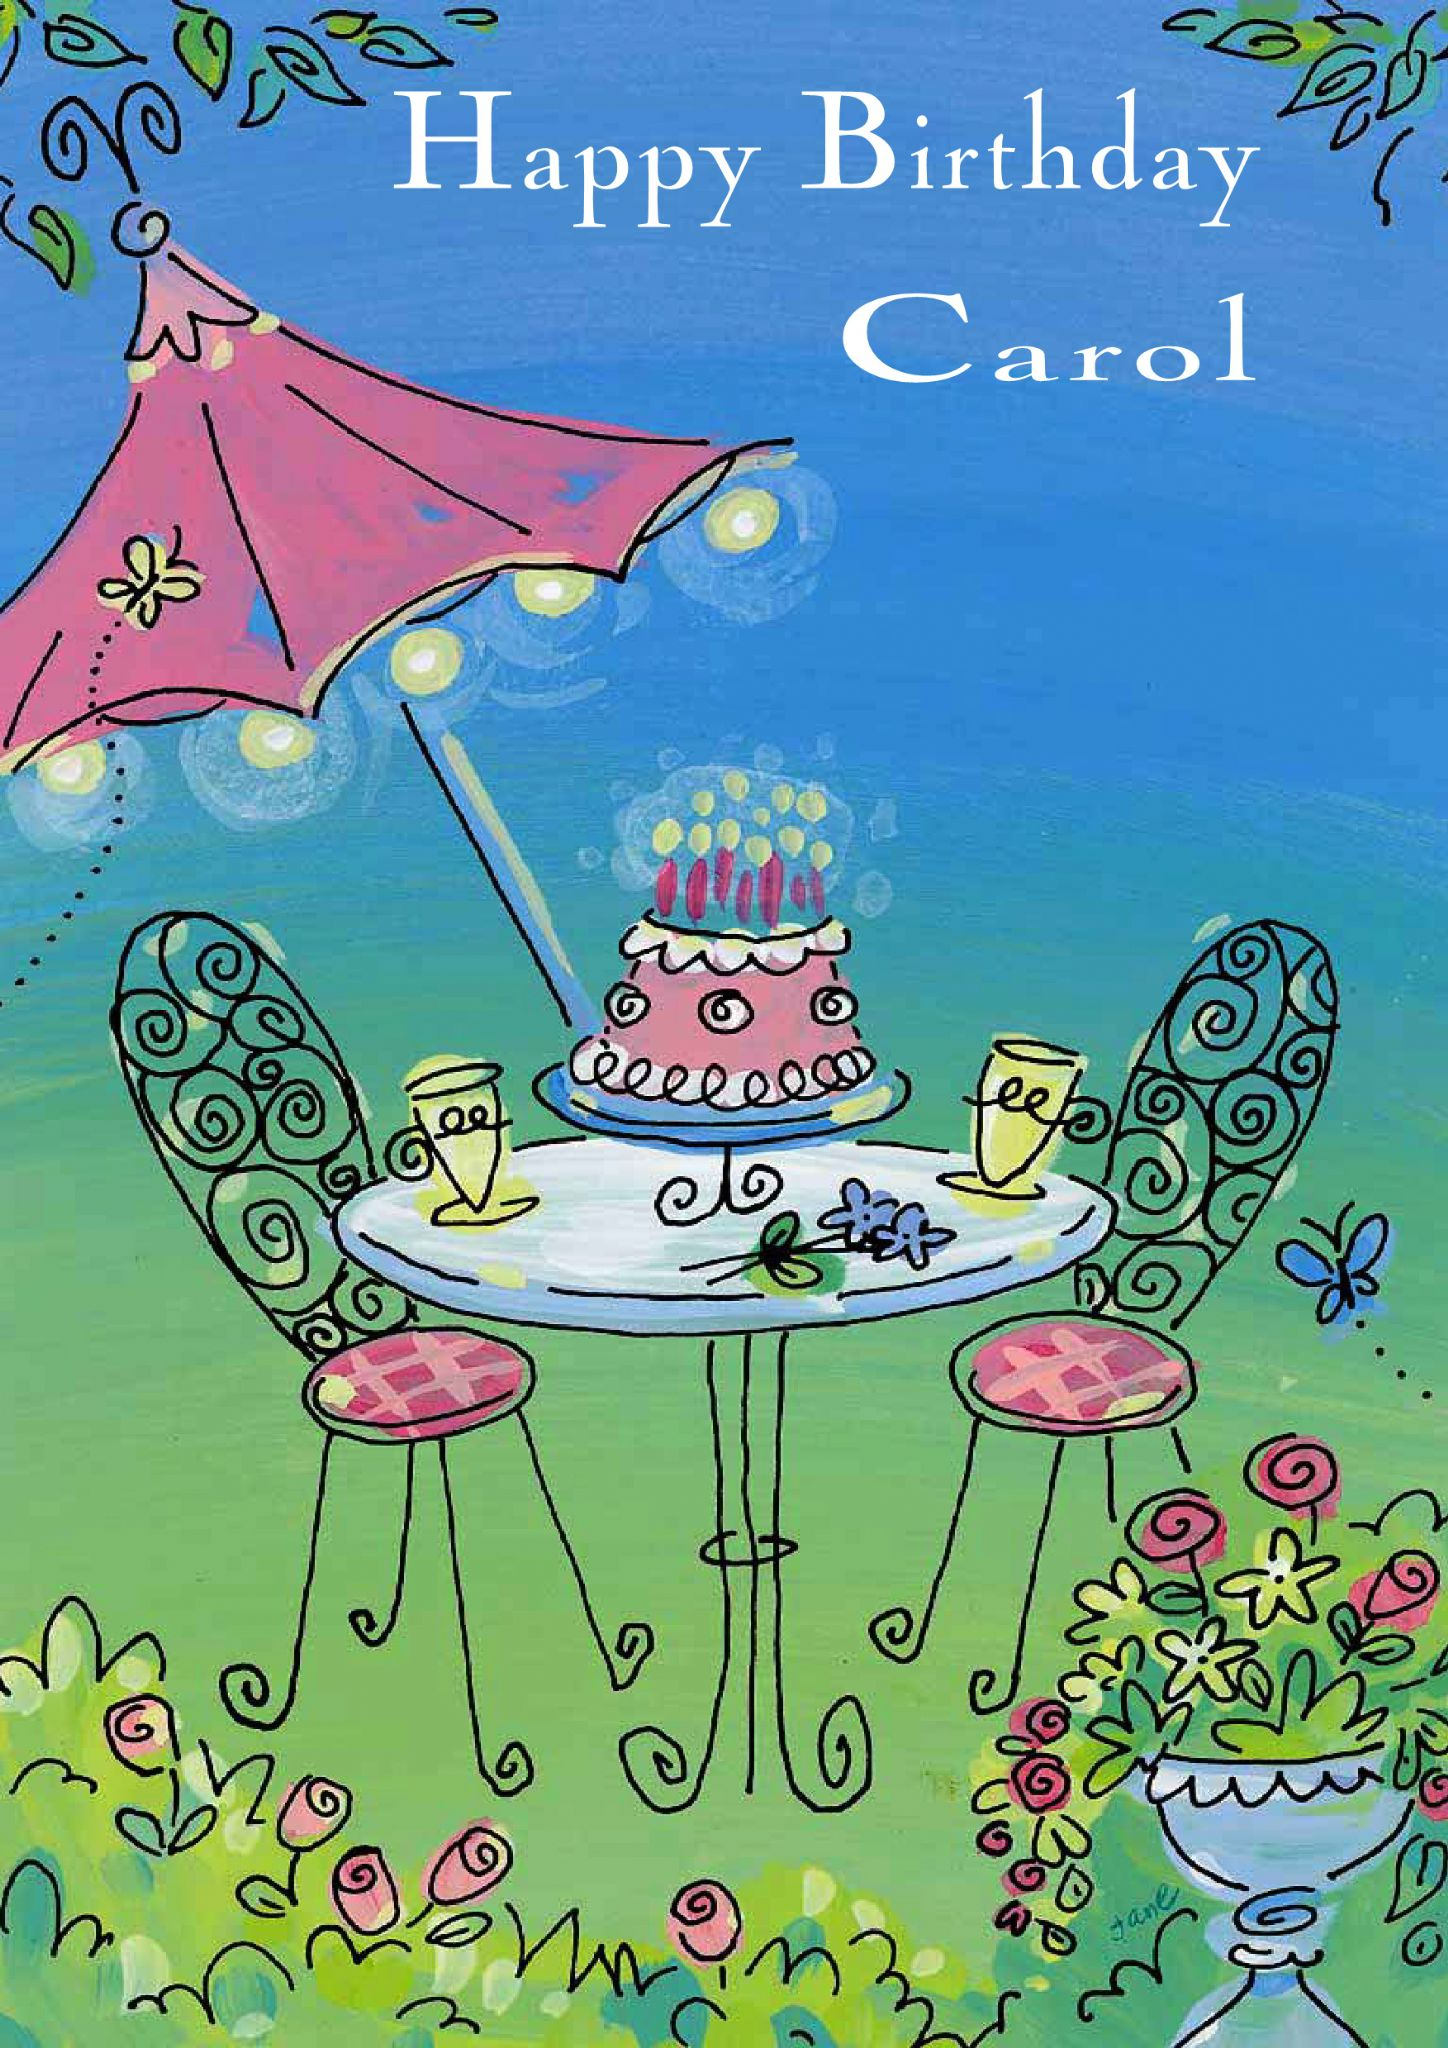 Birthday Happy Carol Cake Sheila Entitlementtrap Excellent Carole 80th Cake...